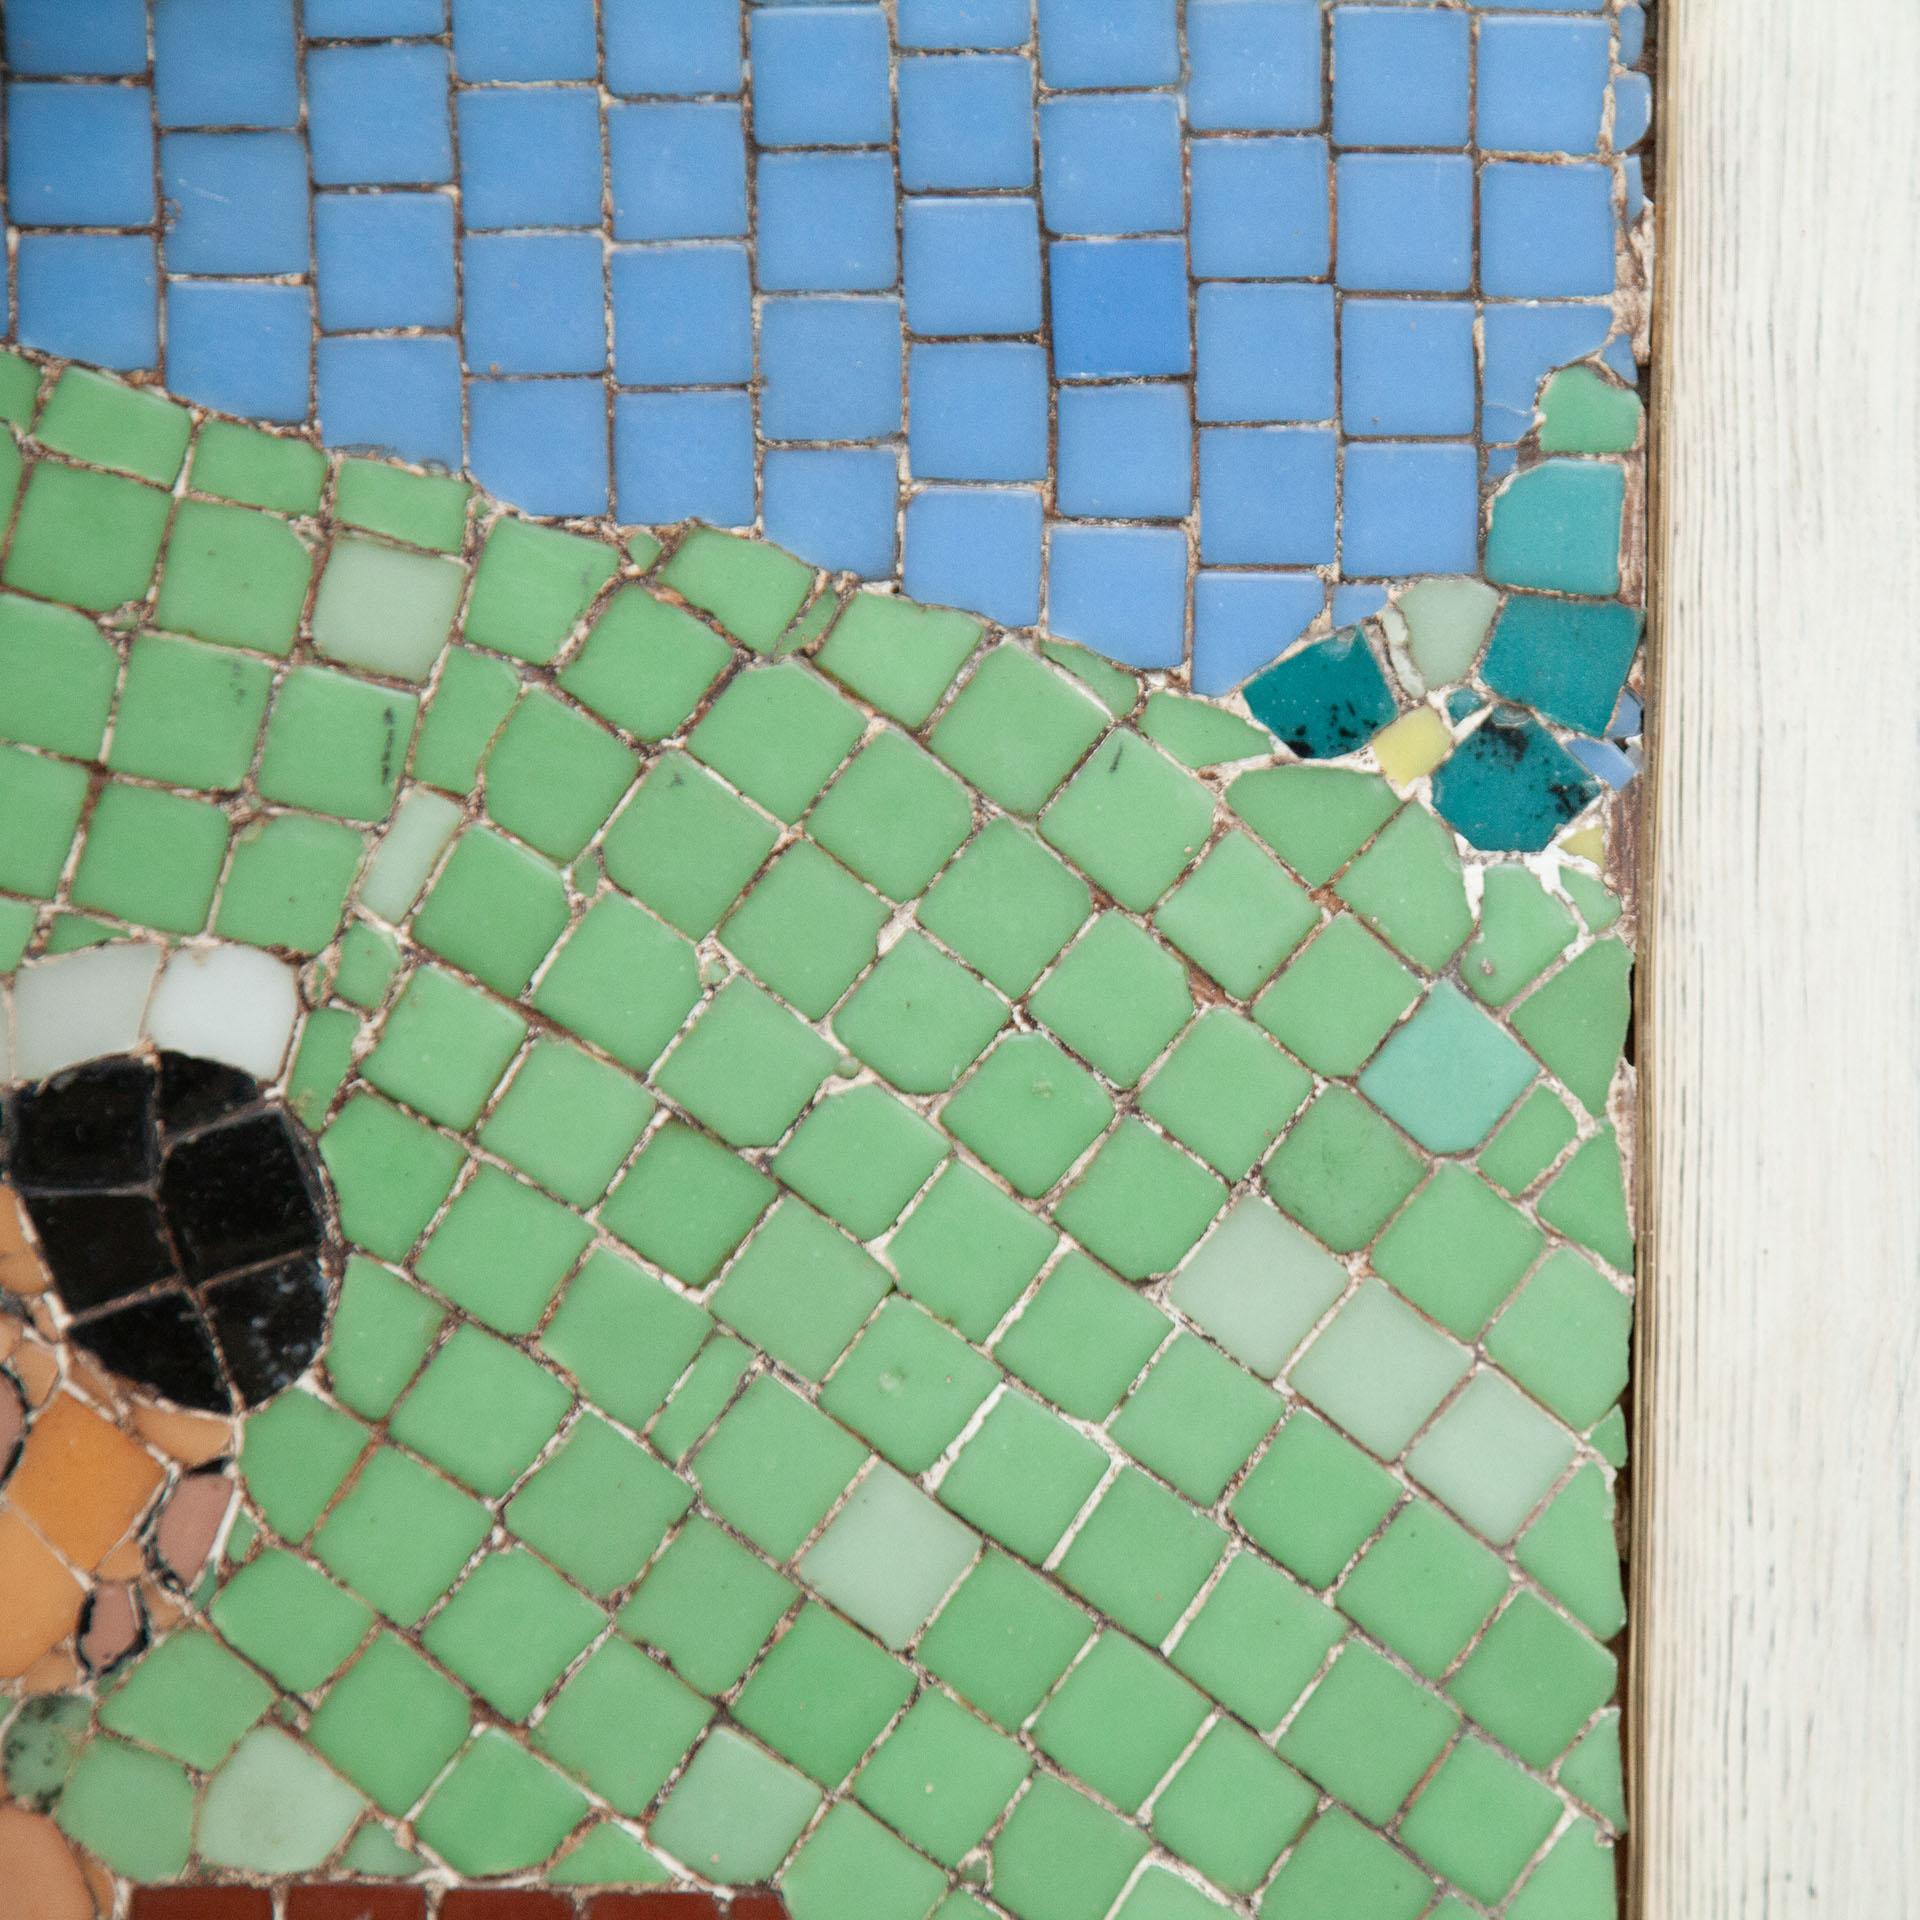 Steel Mosaic Artwork Popeye and Olivia, circa 1970